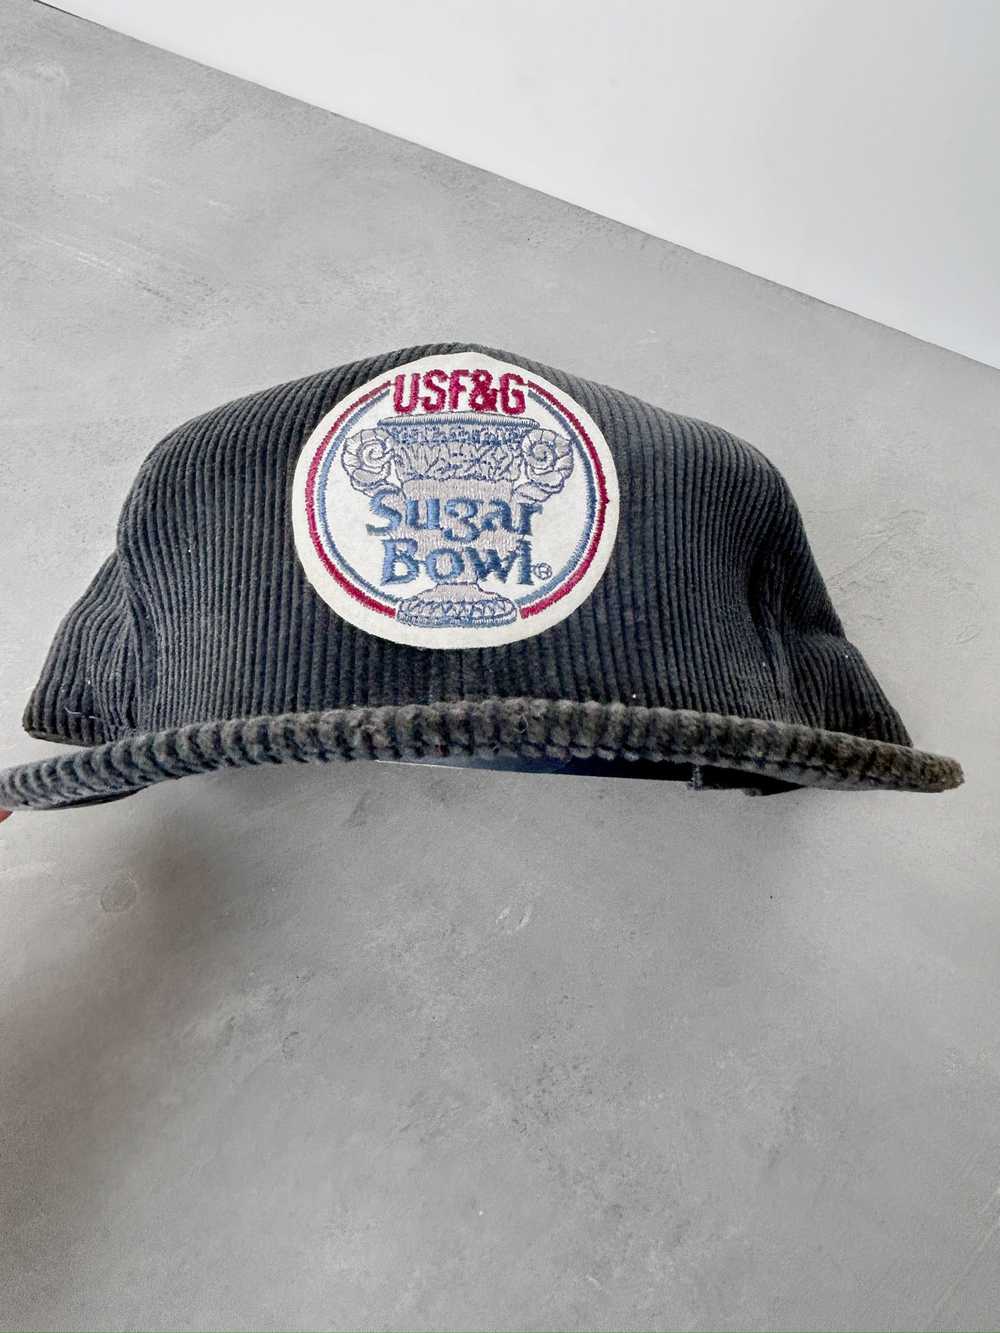 Sugar Bowl Corduroy Hat 80's - image 4